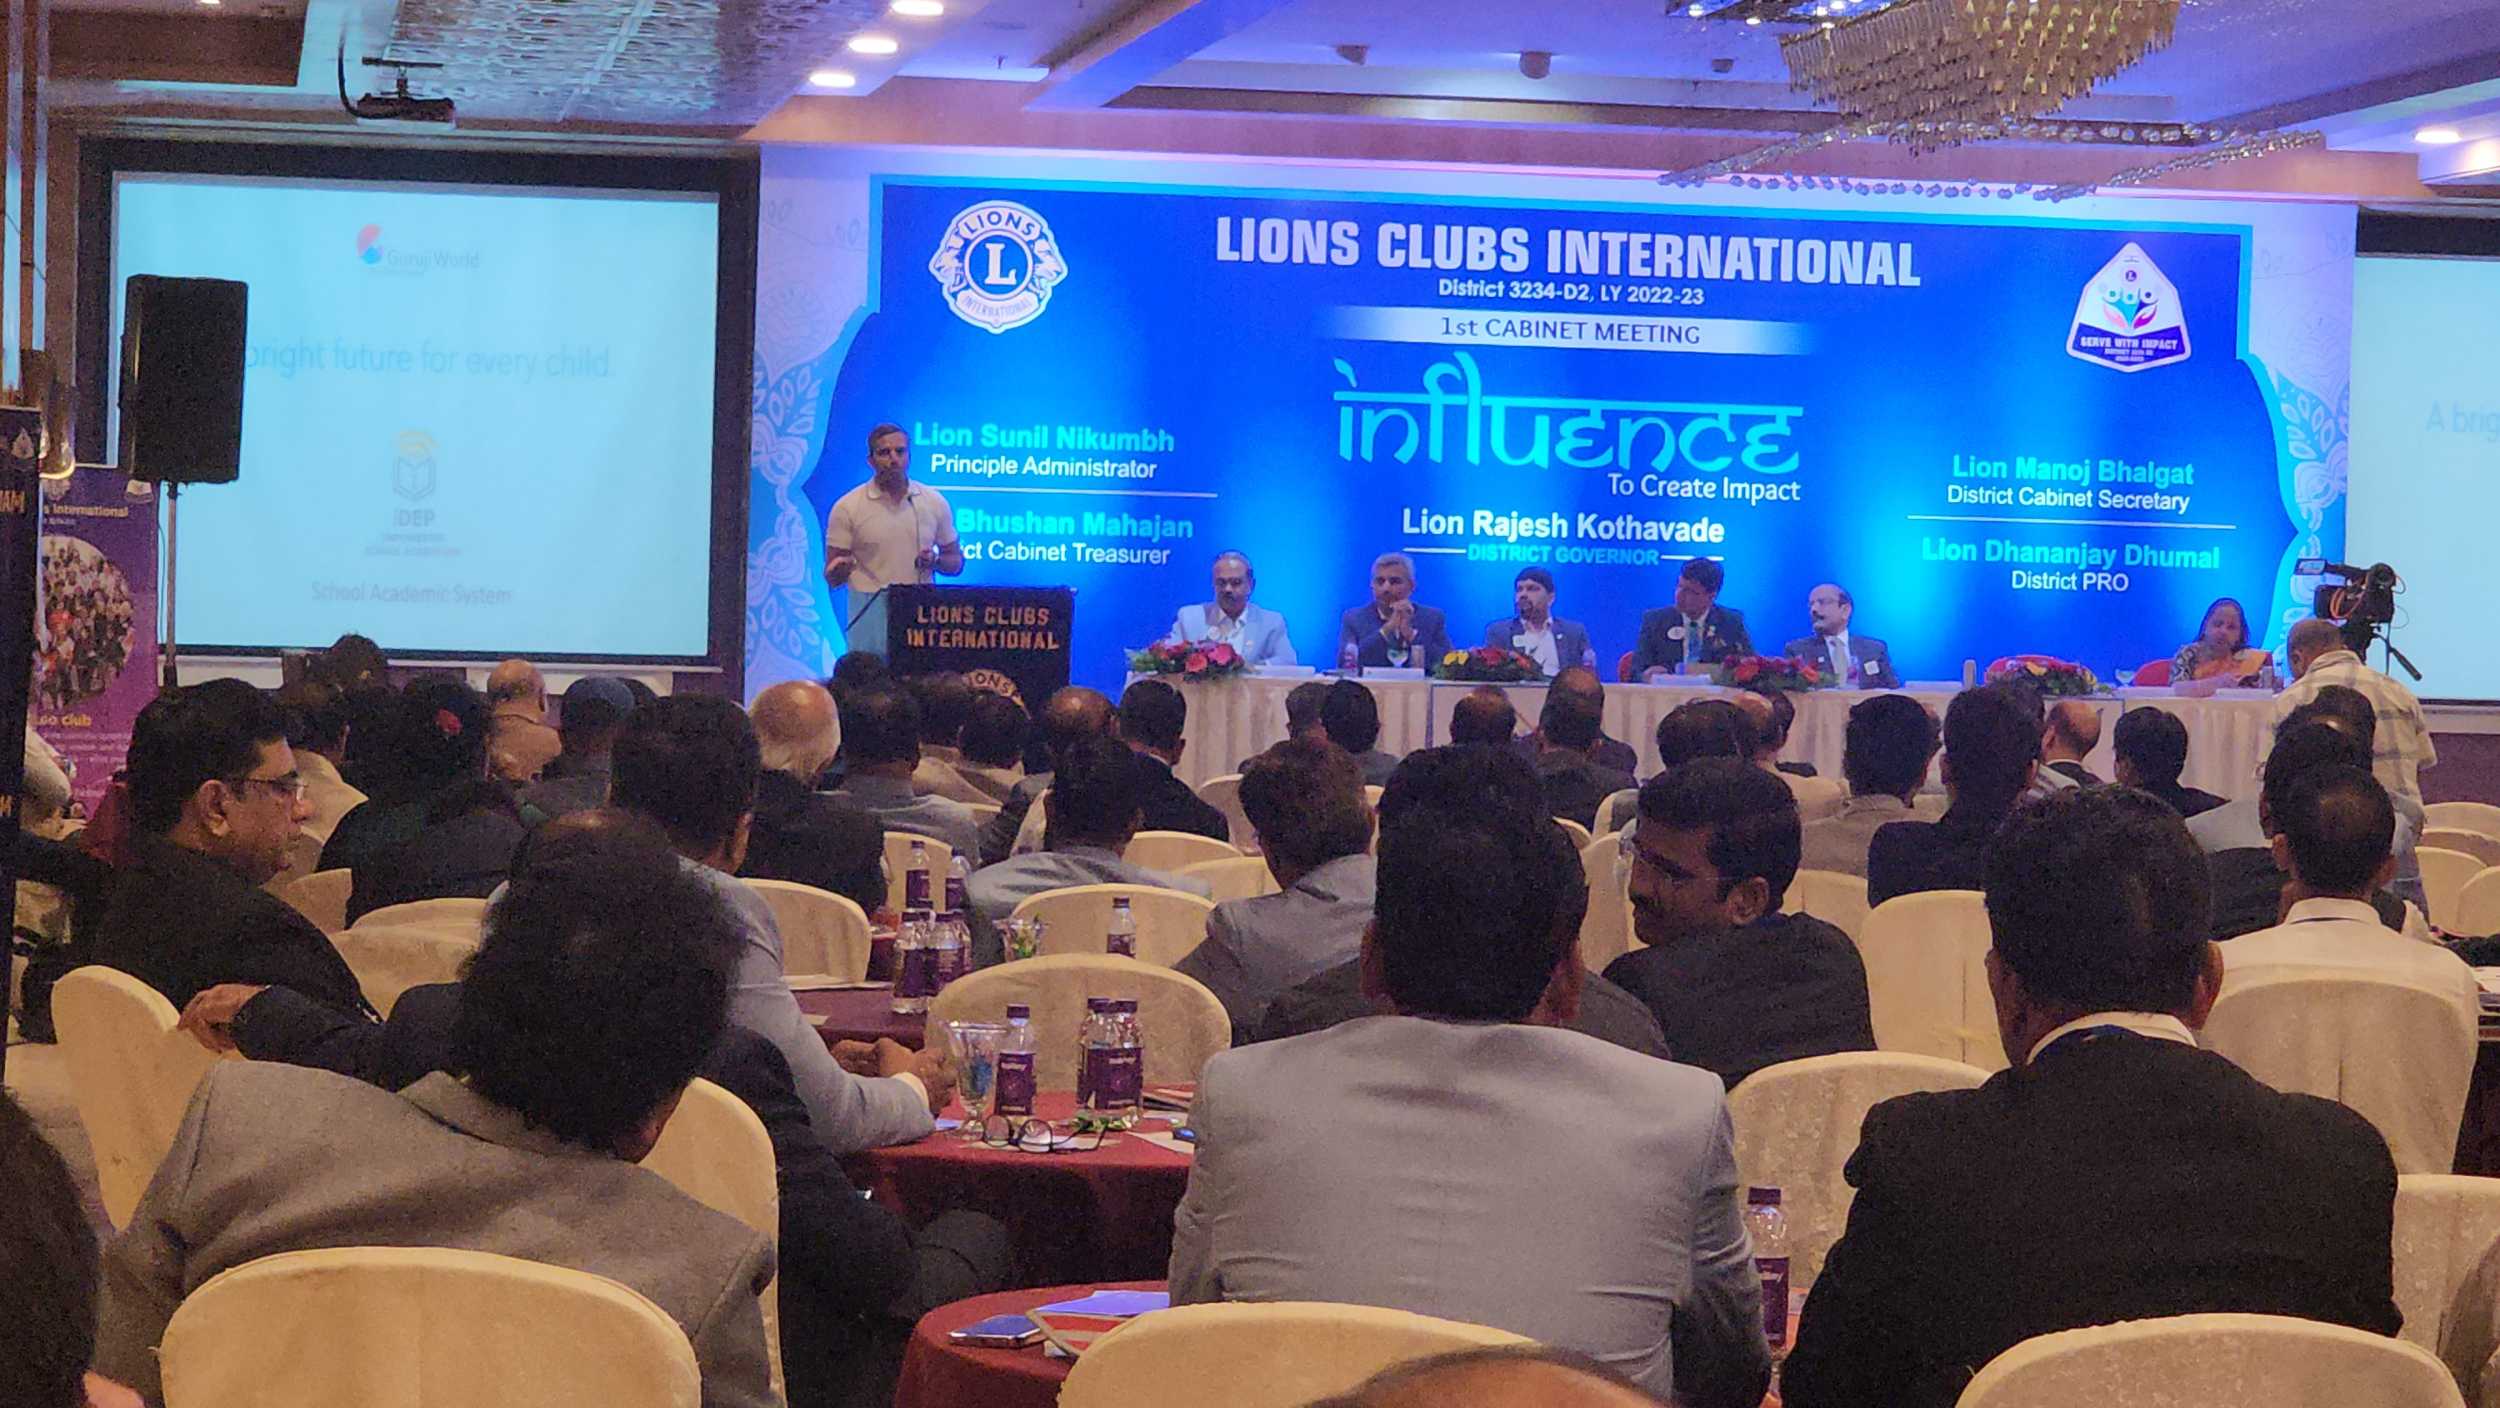 iDEP Team at the Lions Club International Event Nashik